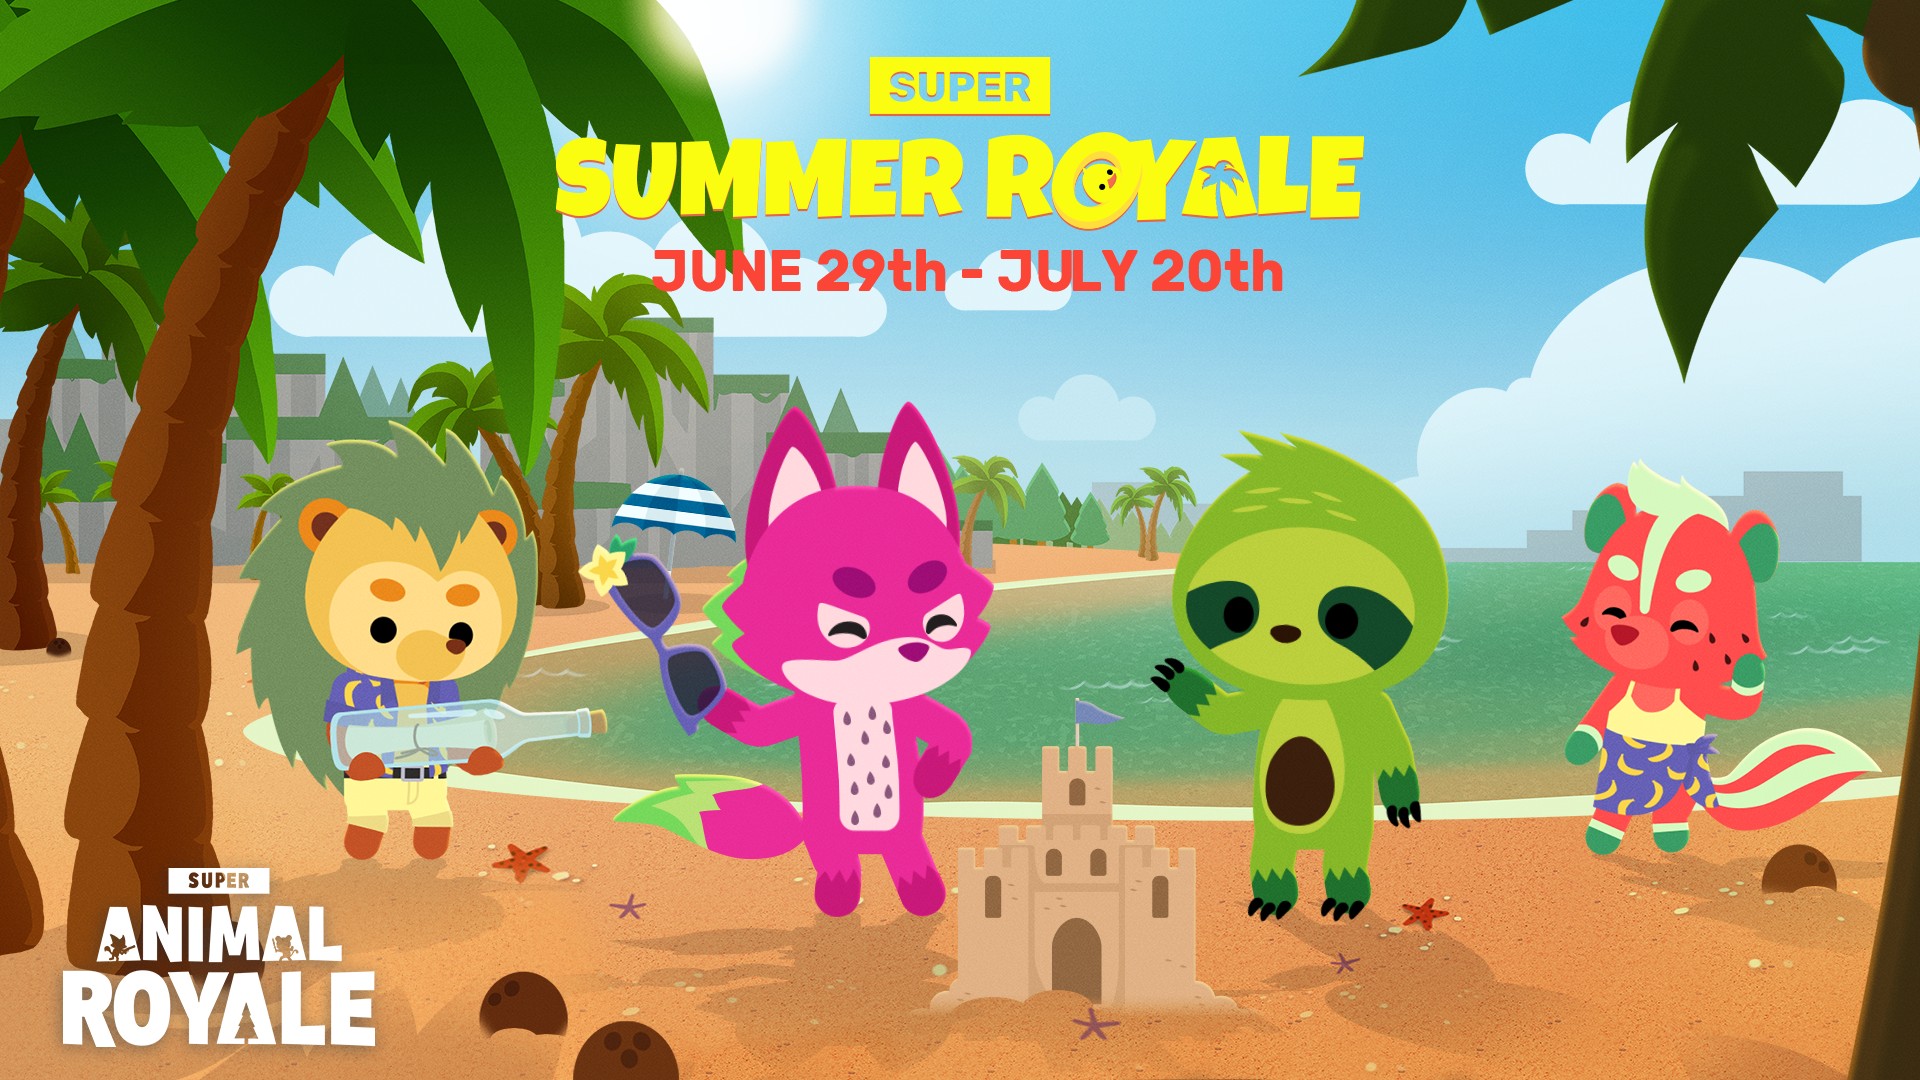 Super Animal Royale’s Summer Royale Event